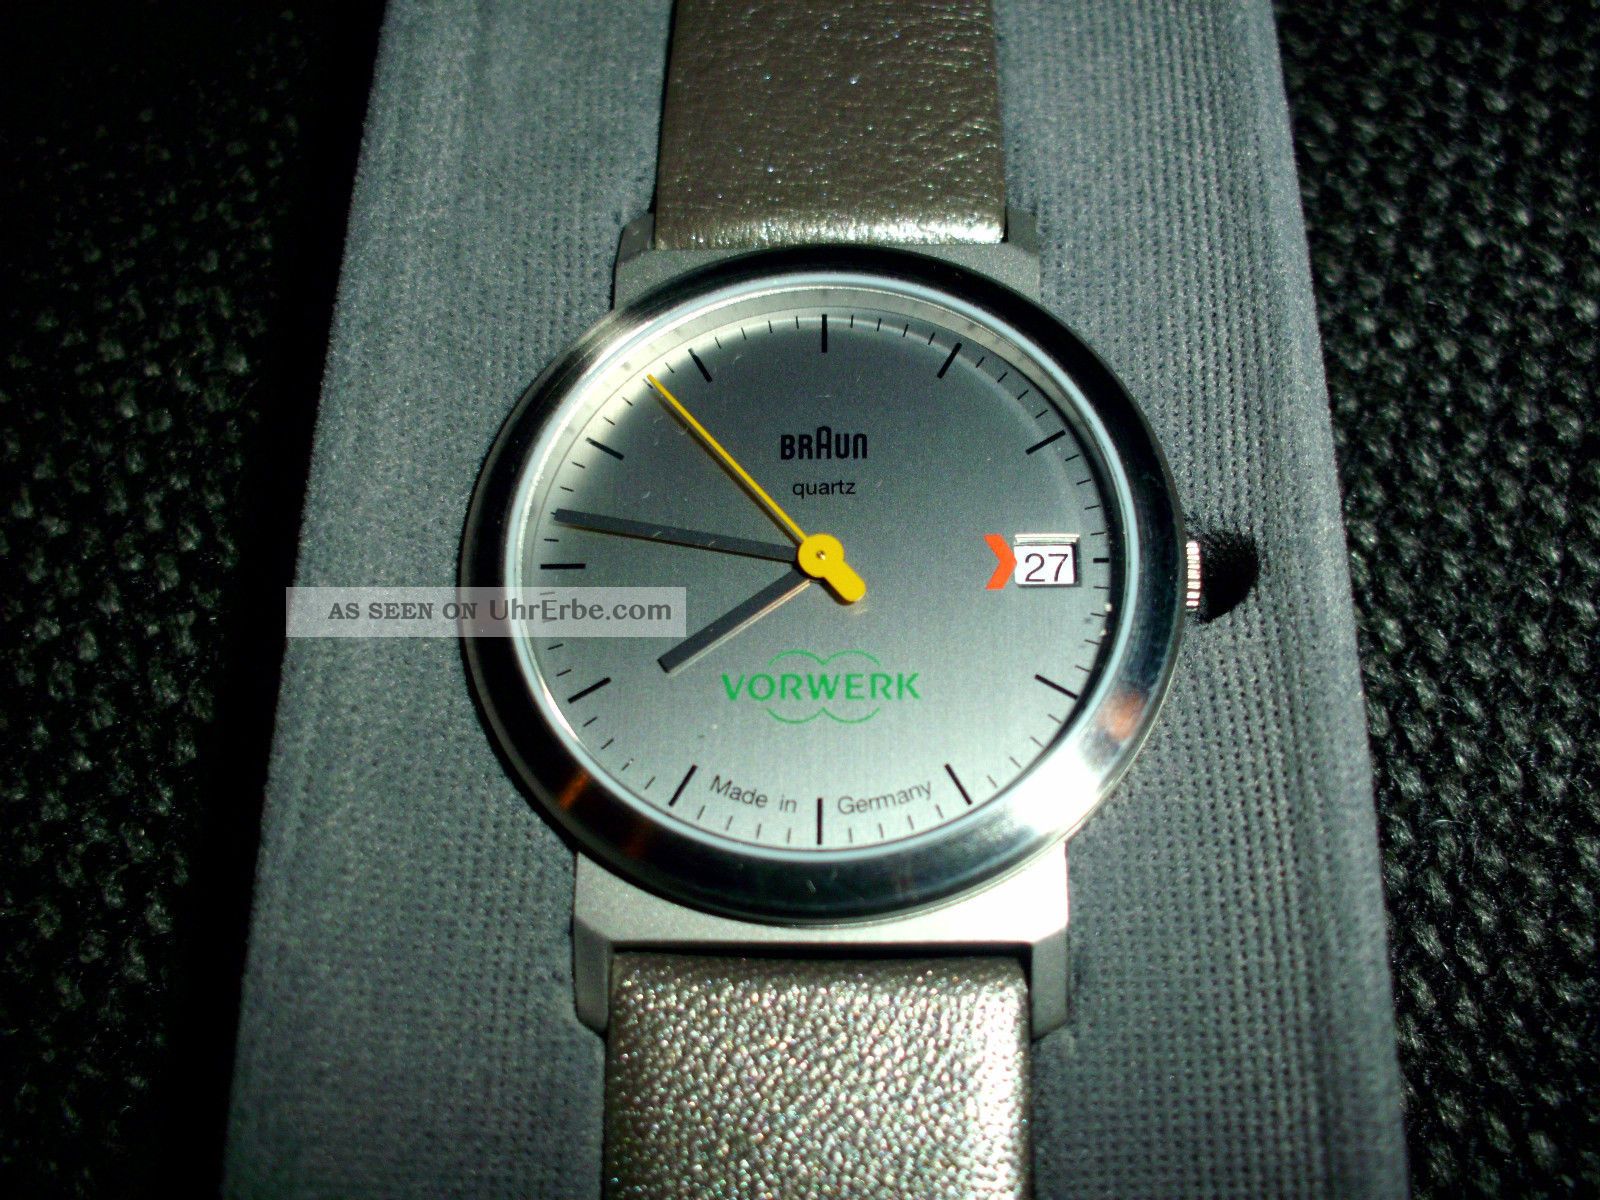 Braun Armbanduhr Aw 22 - Type 3 812 Silver - - Vorwerk Edition - - Lederarmband Armbanduhren Bild